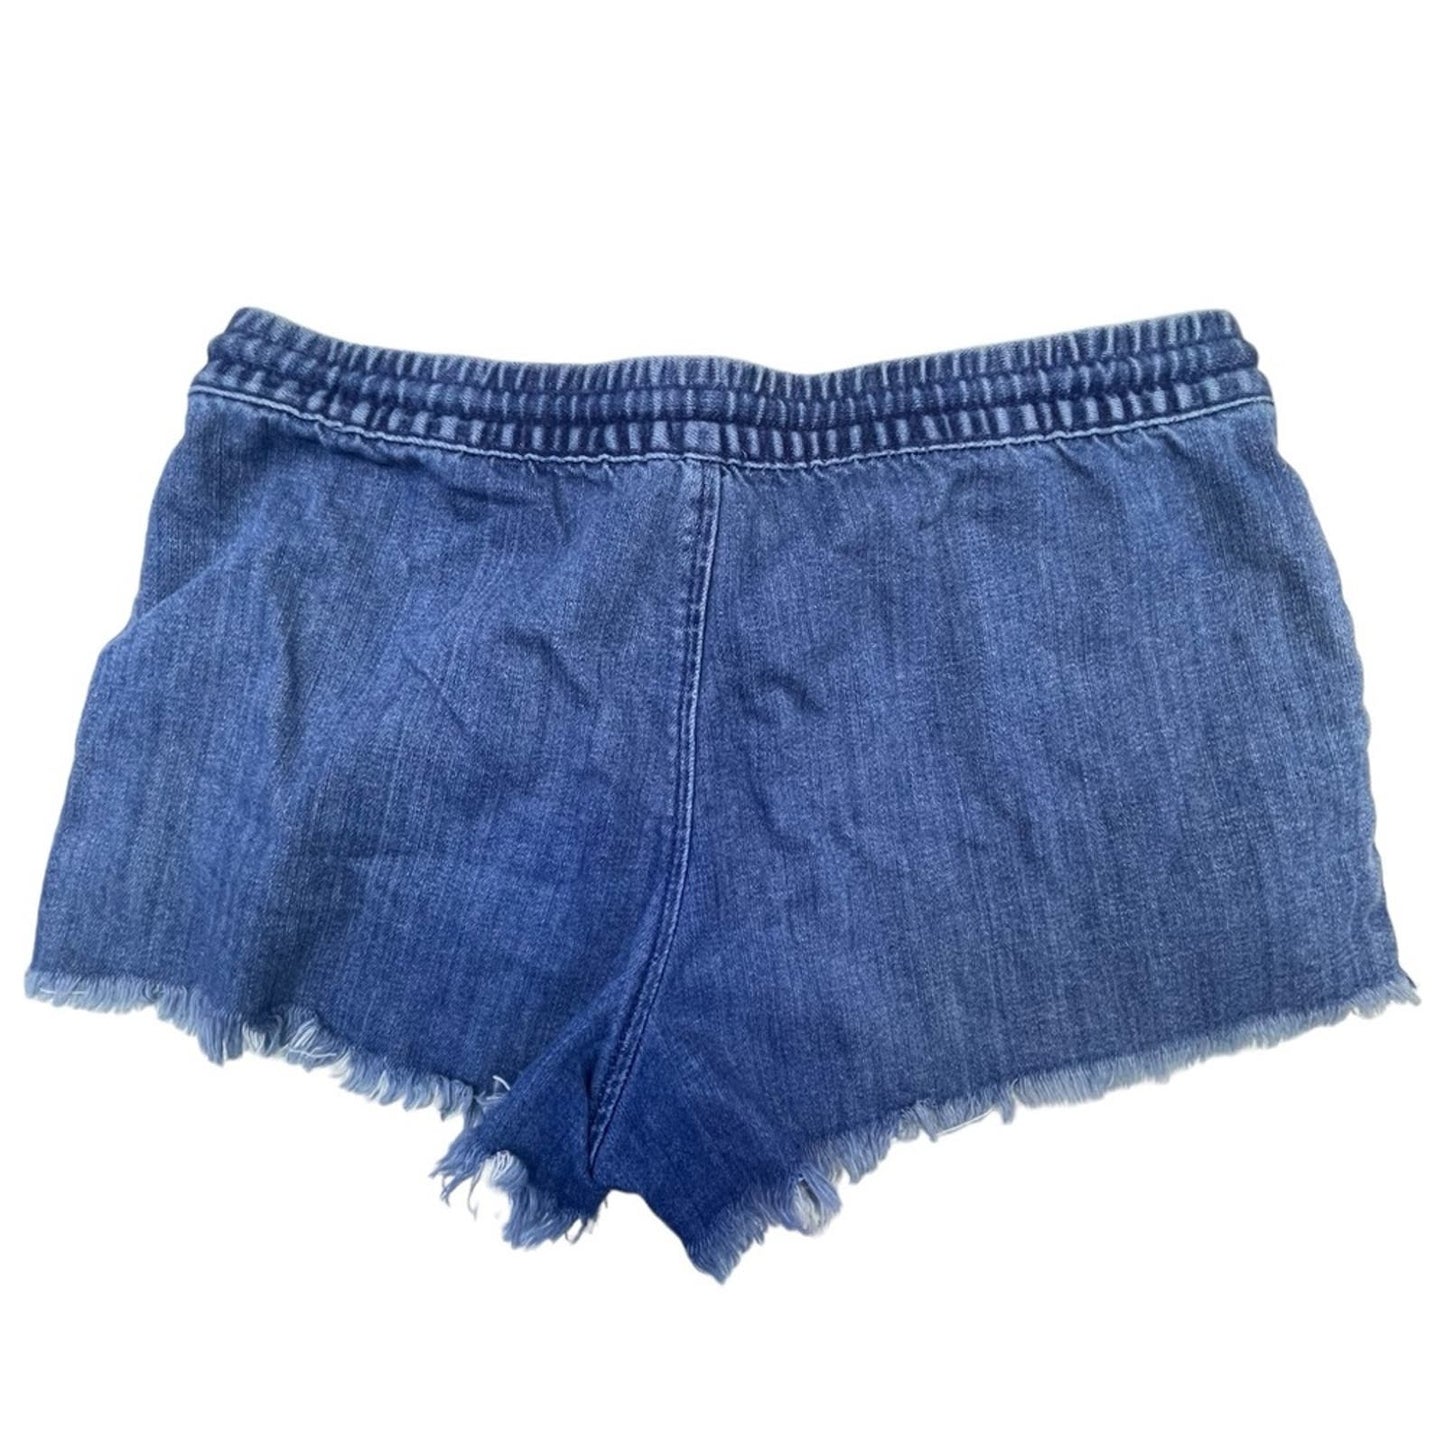 Aerie Blue Denim Drawstring Shorts with Fringe